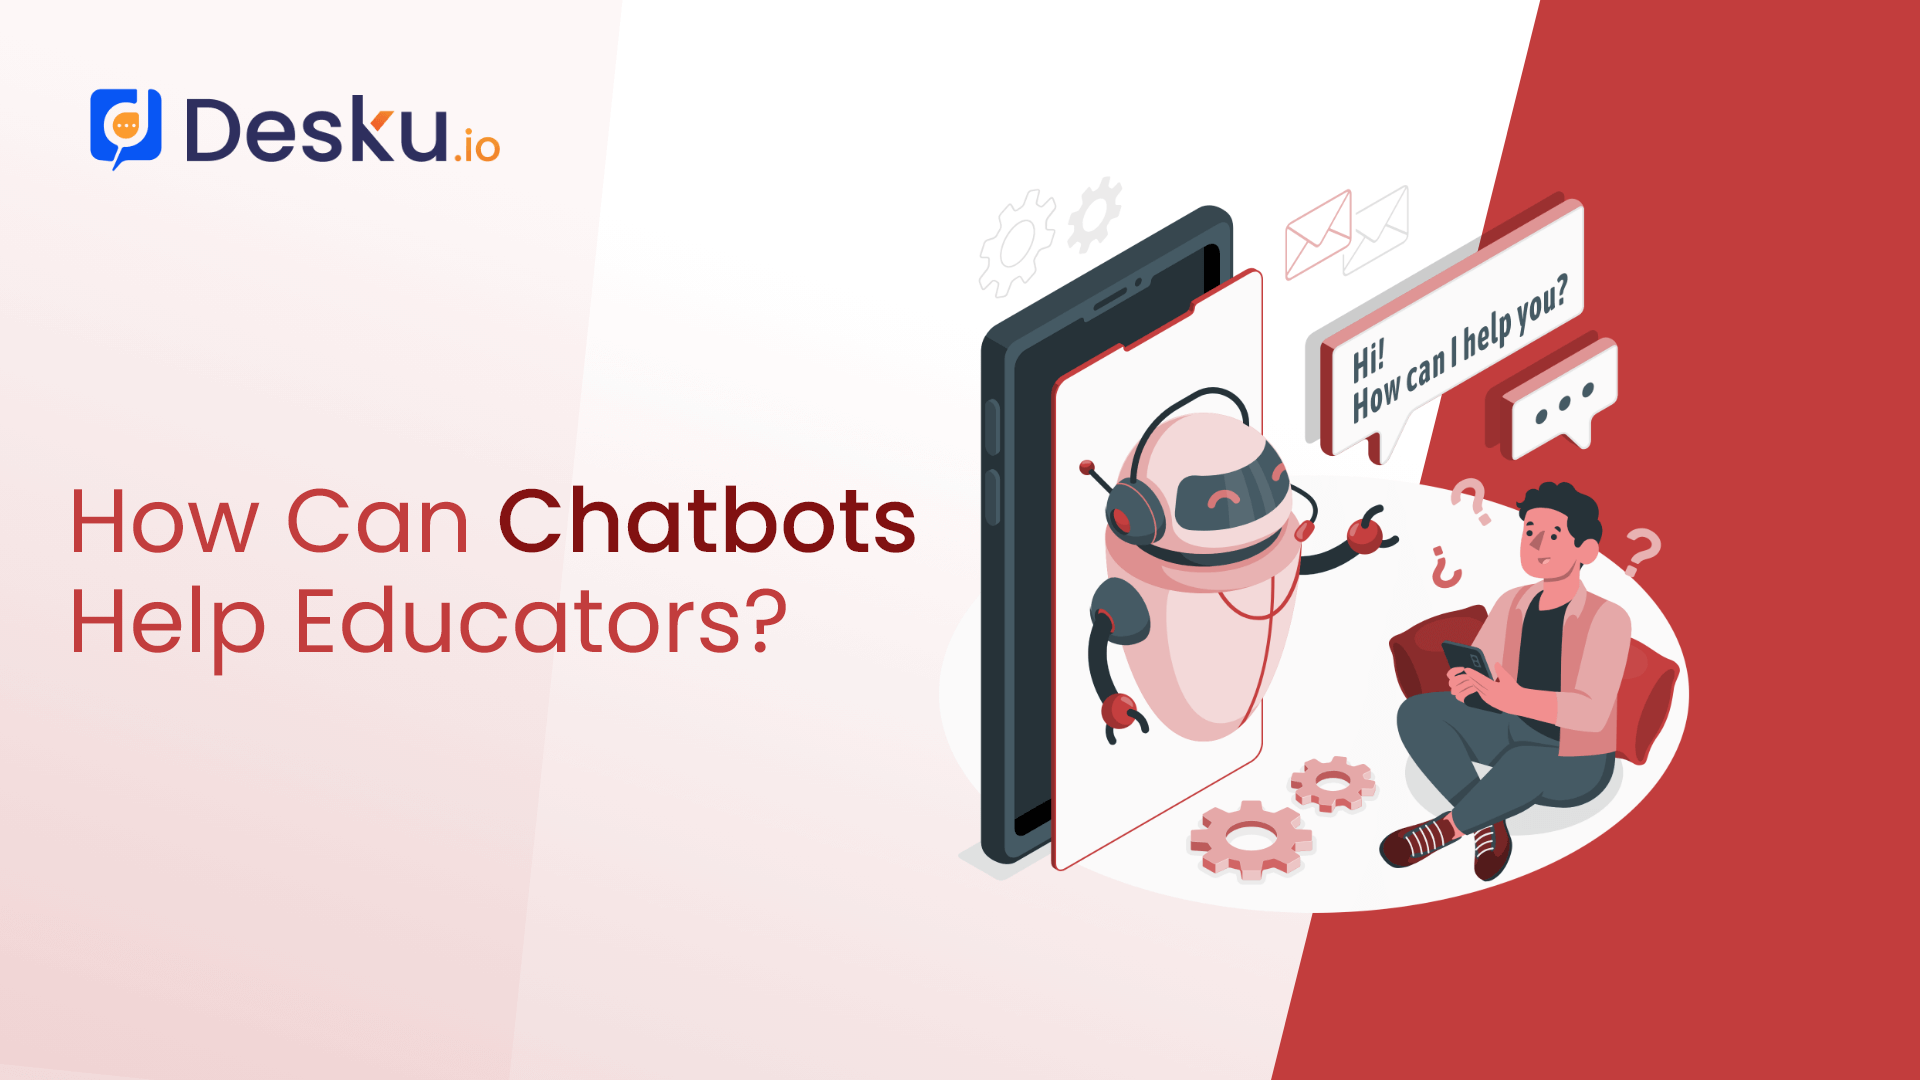 How can chatbots help educators?